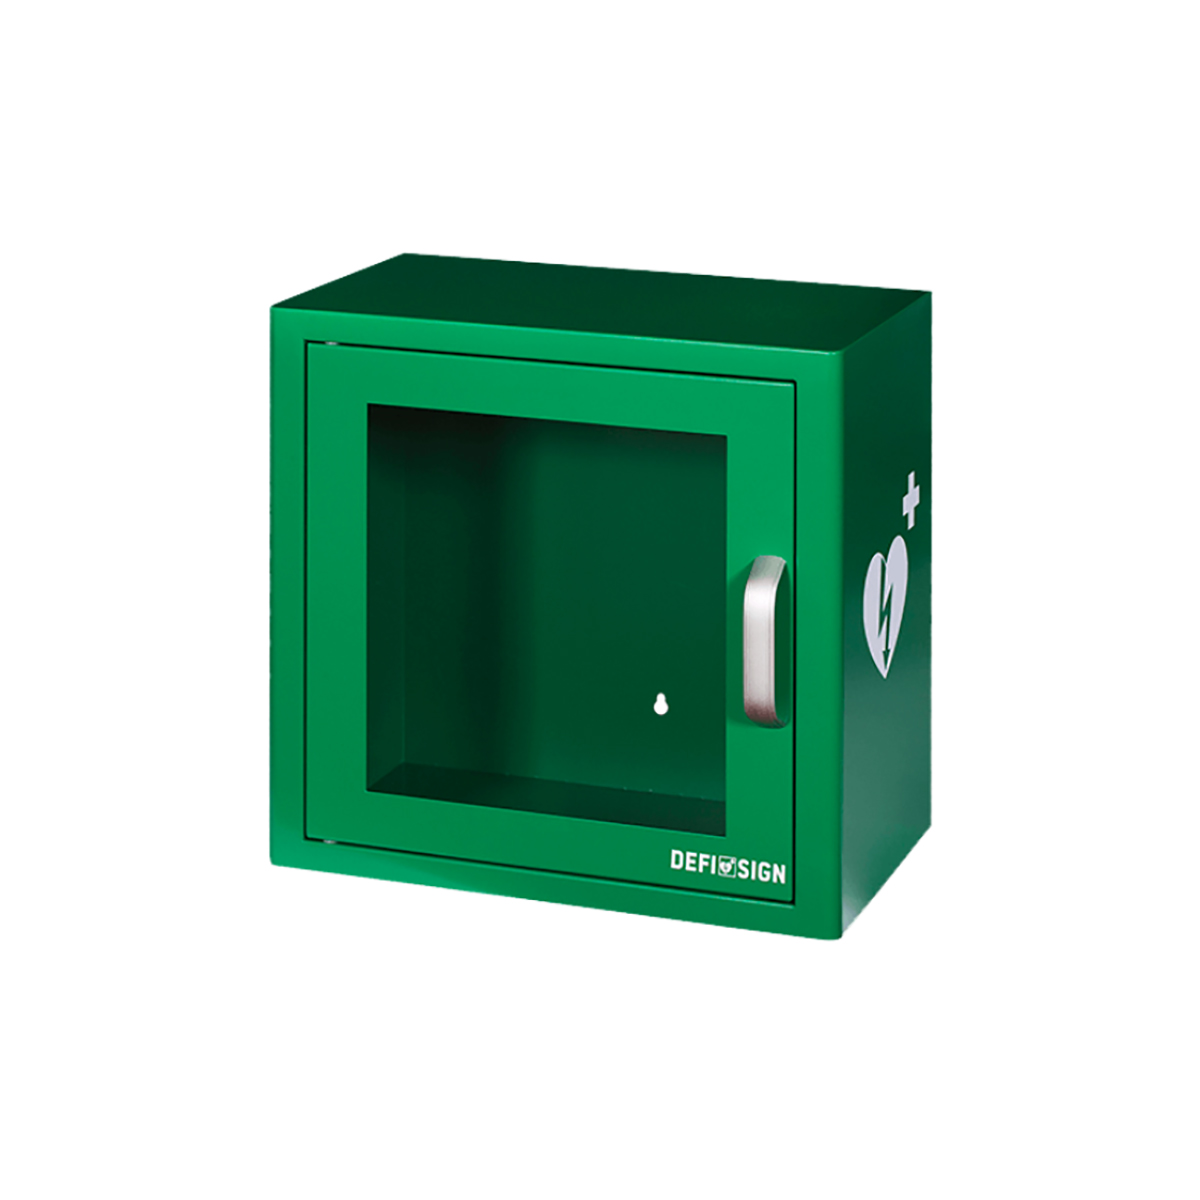 Green Indoor Defibrillator Cabinet with Alarm